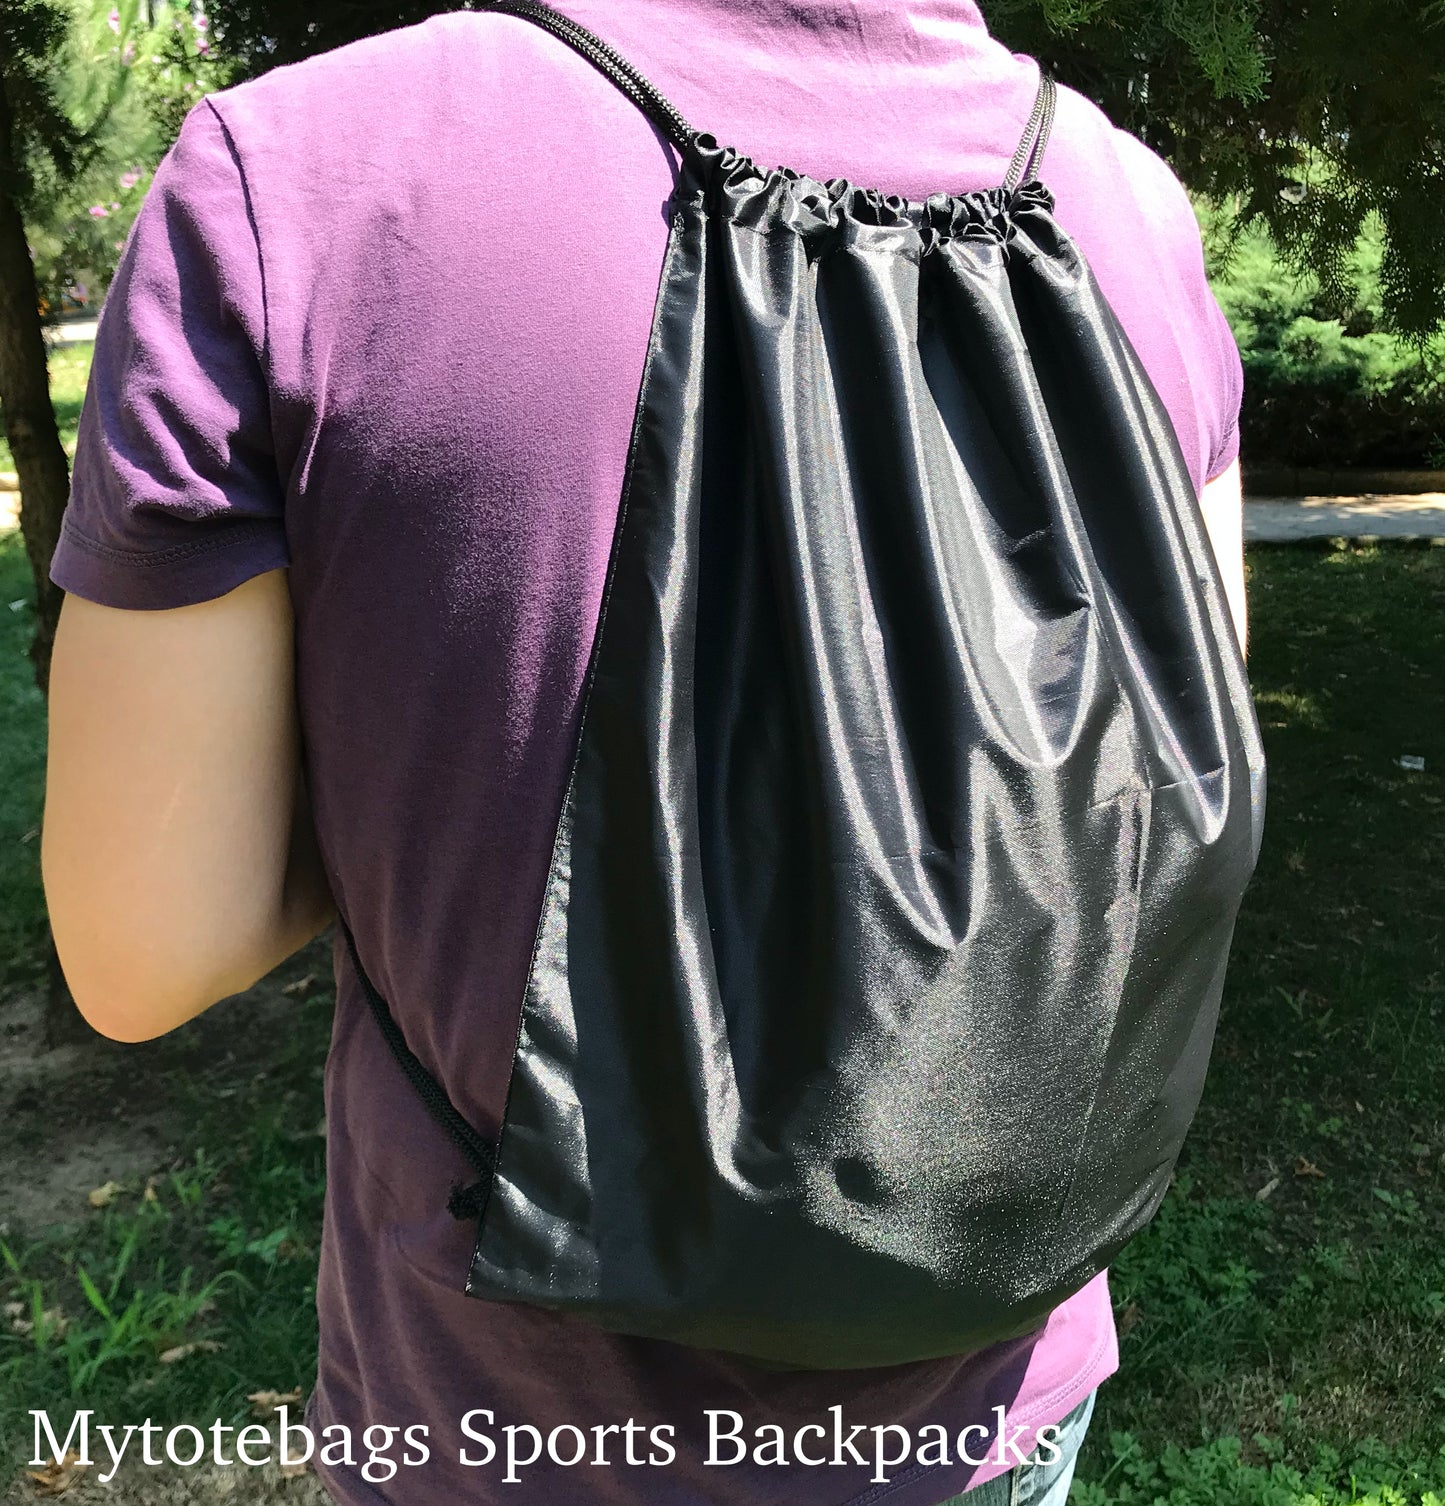 Mytotebags (12 Value Pack) Economy Polyester Sports Drawstring Backpack, Medium Size